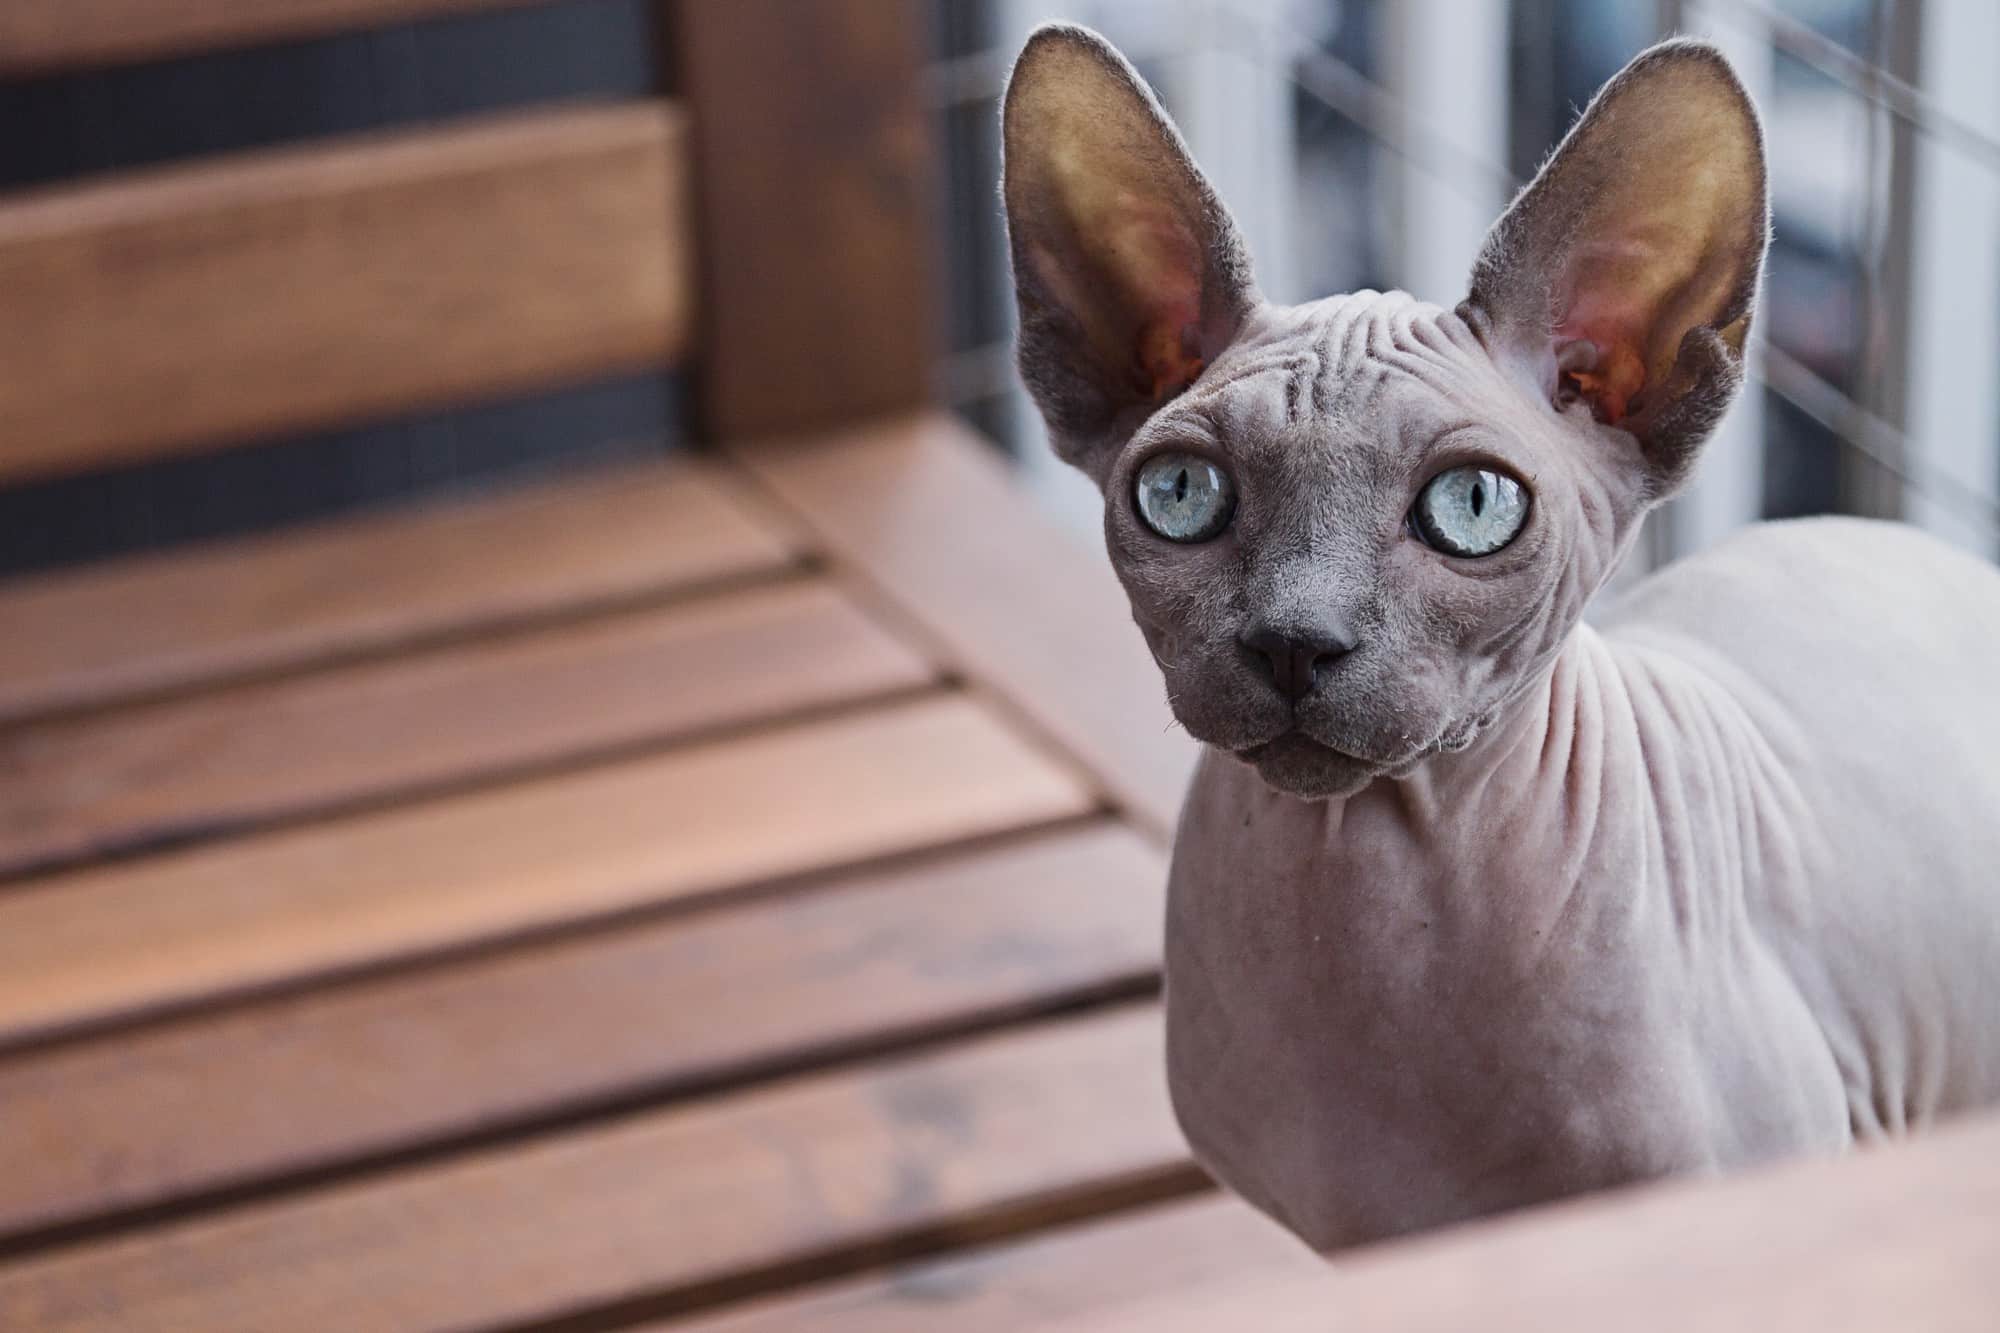 Dureza Retocar algodón 3 razas de gato sin pelo: Cuidados